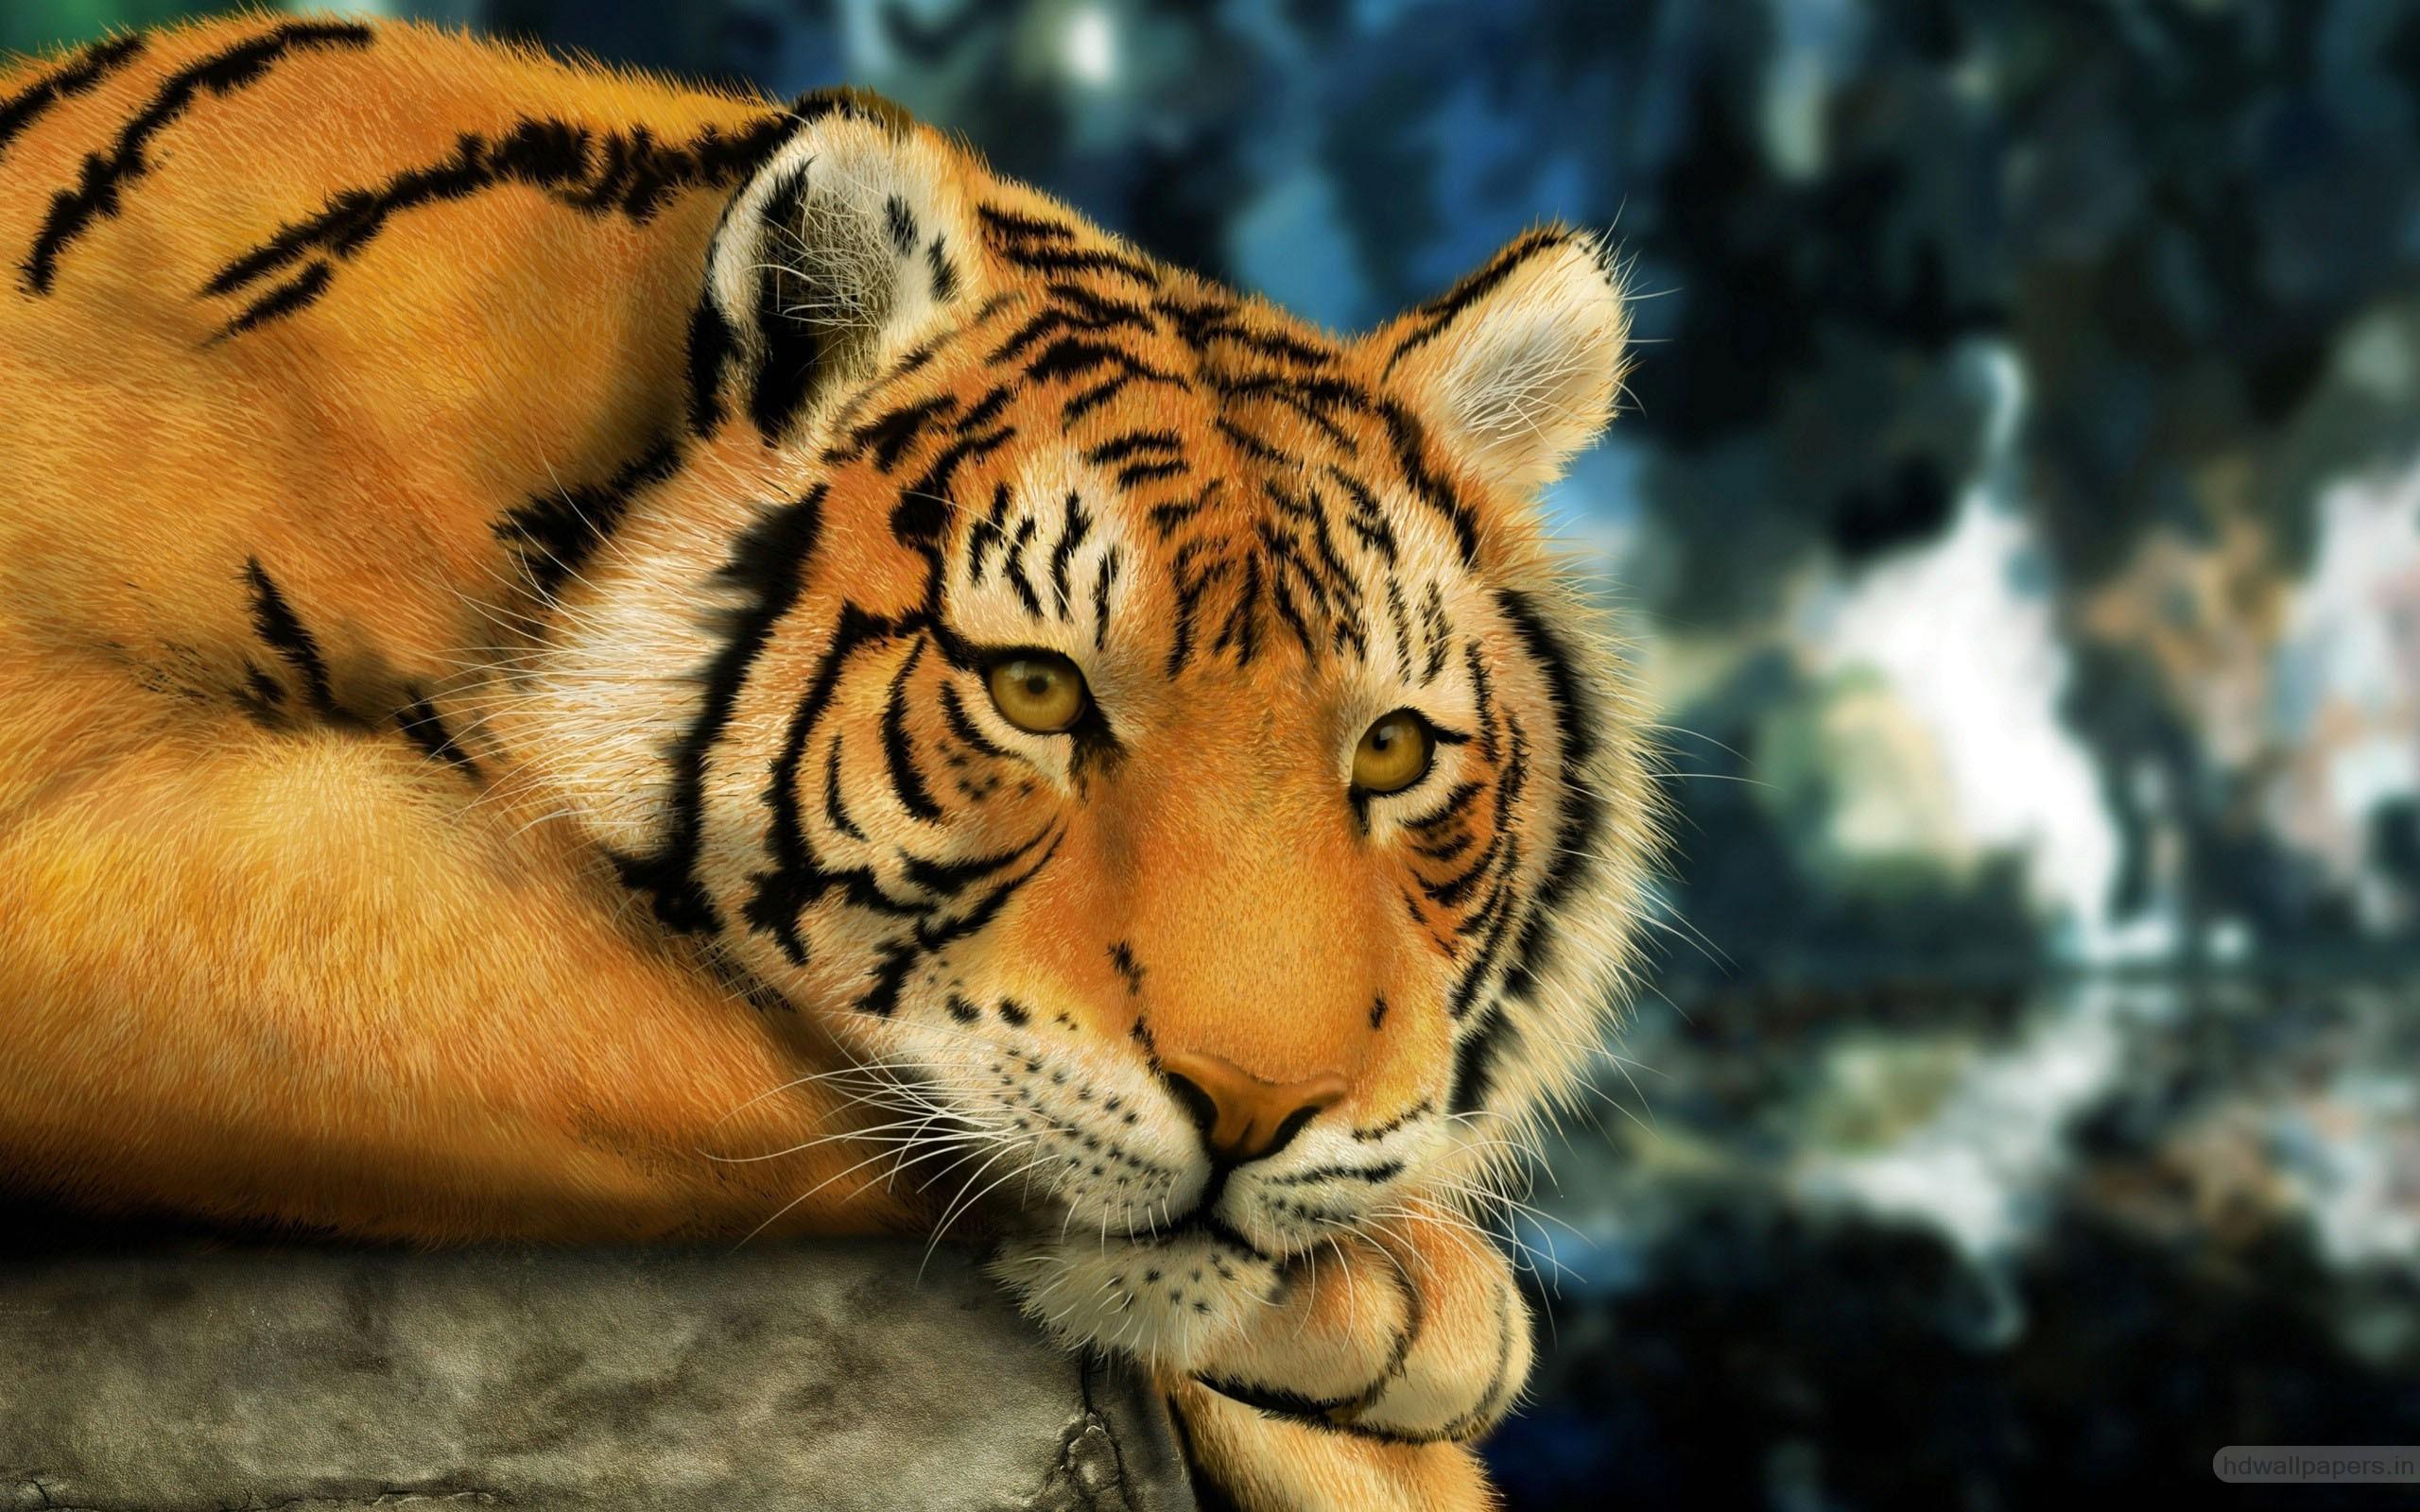 Tiger Painting Wallpaper